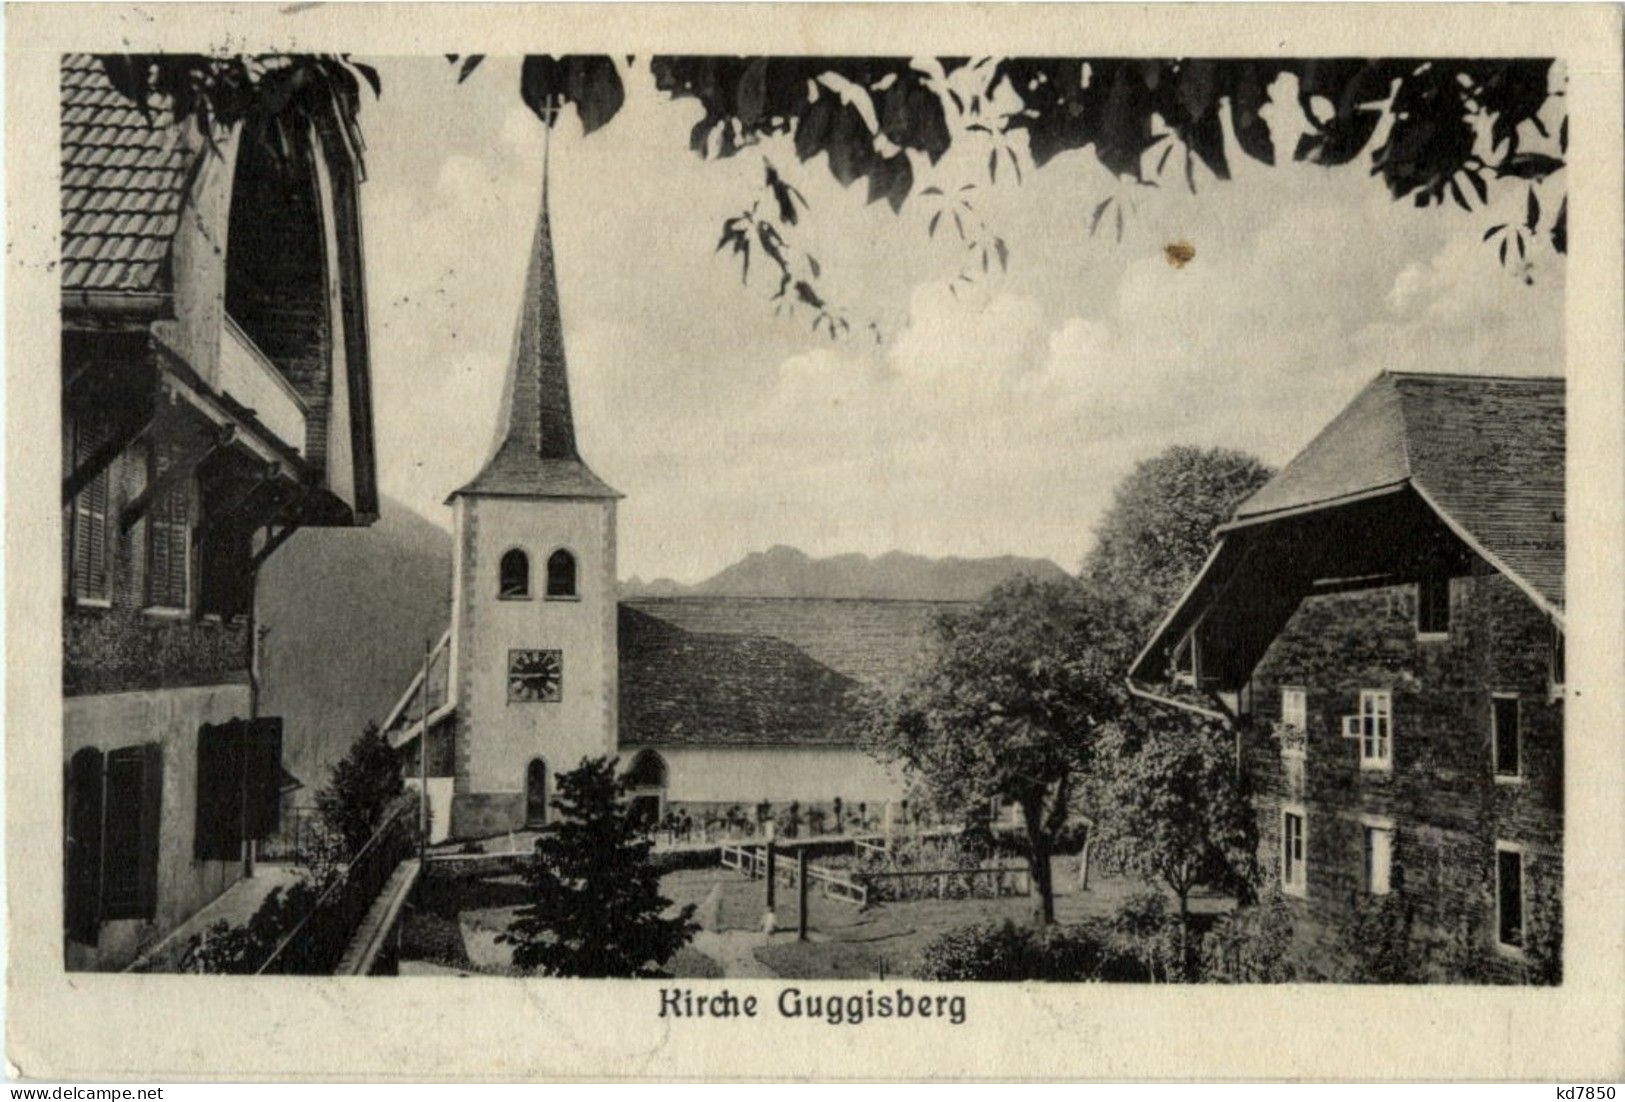 Guggisberg Kirche - Guggisberg